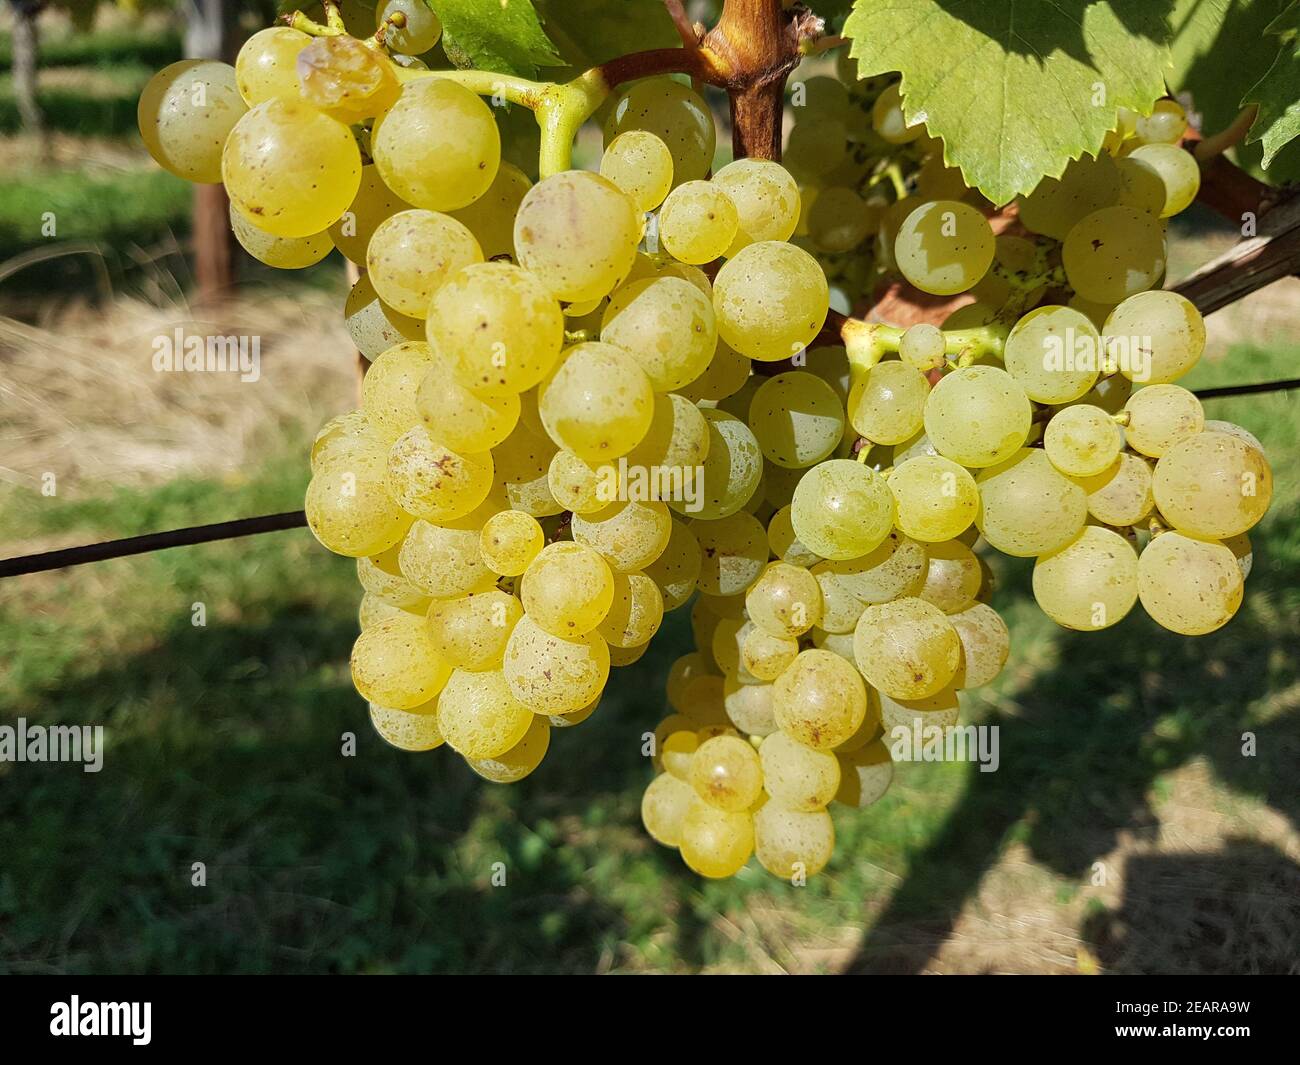 Mueller-Thurgau, Vitis, vinifera, Traube Stock Photo